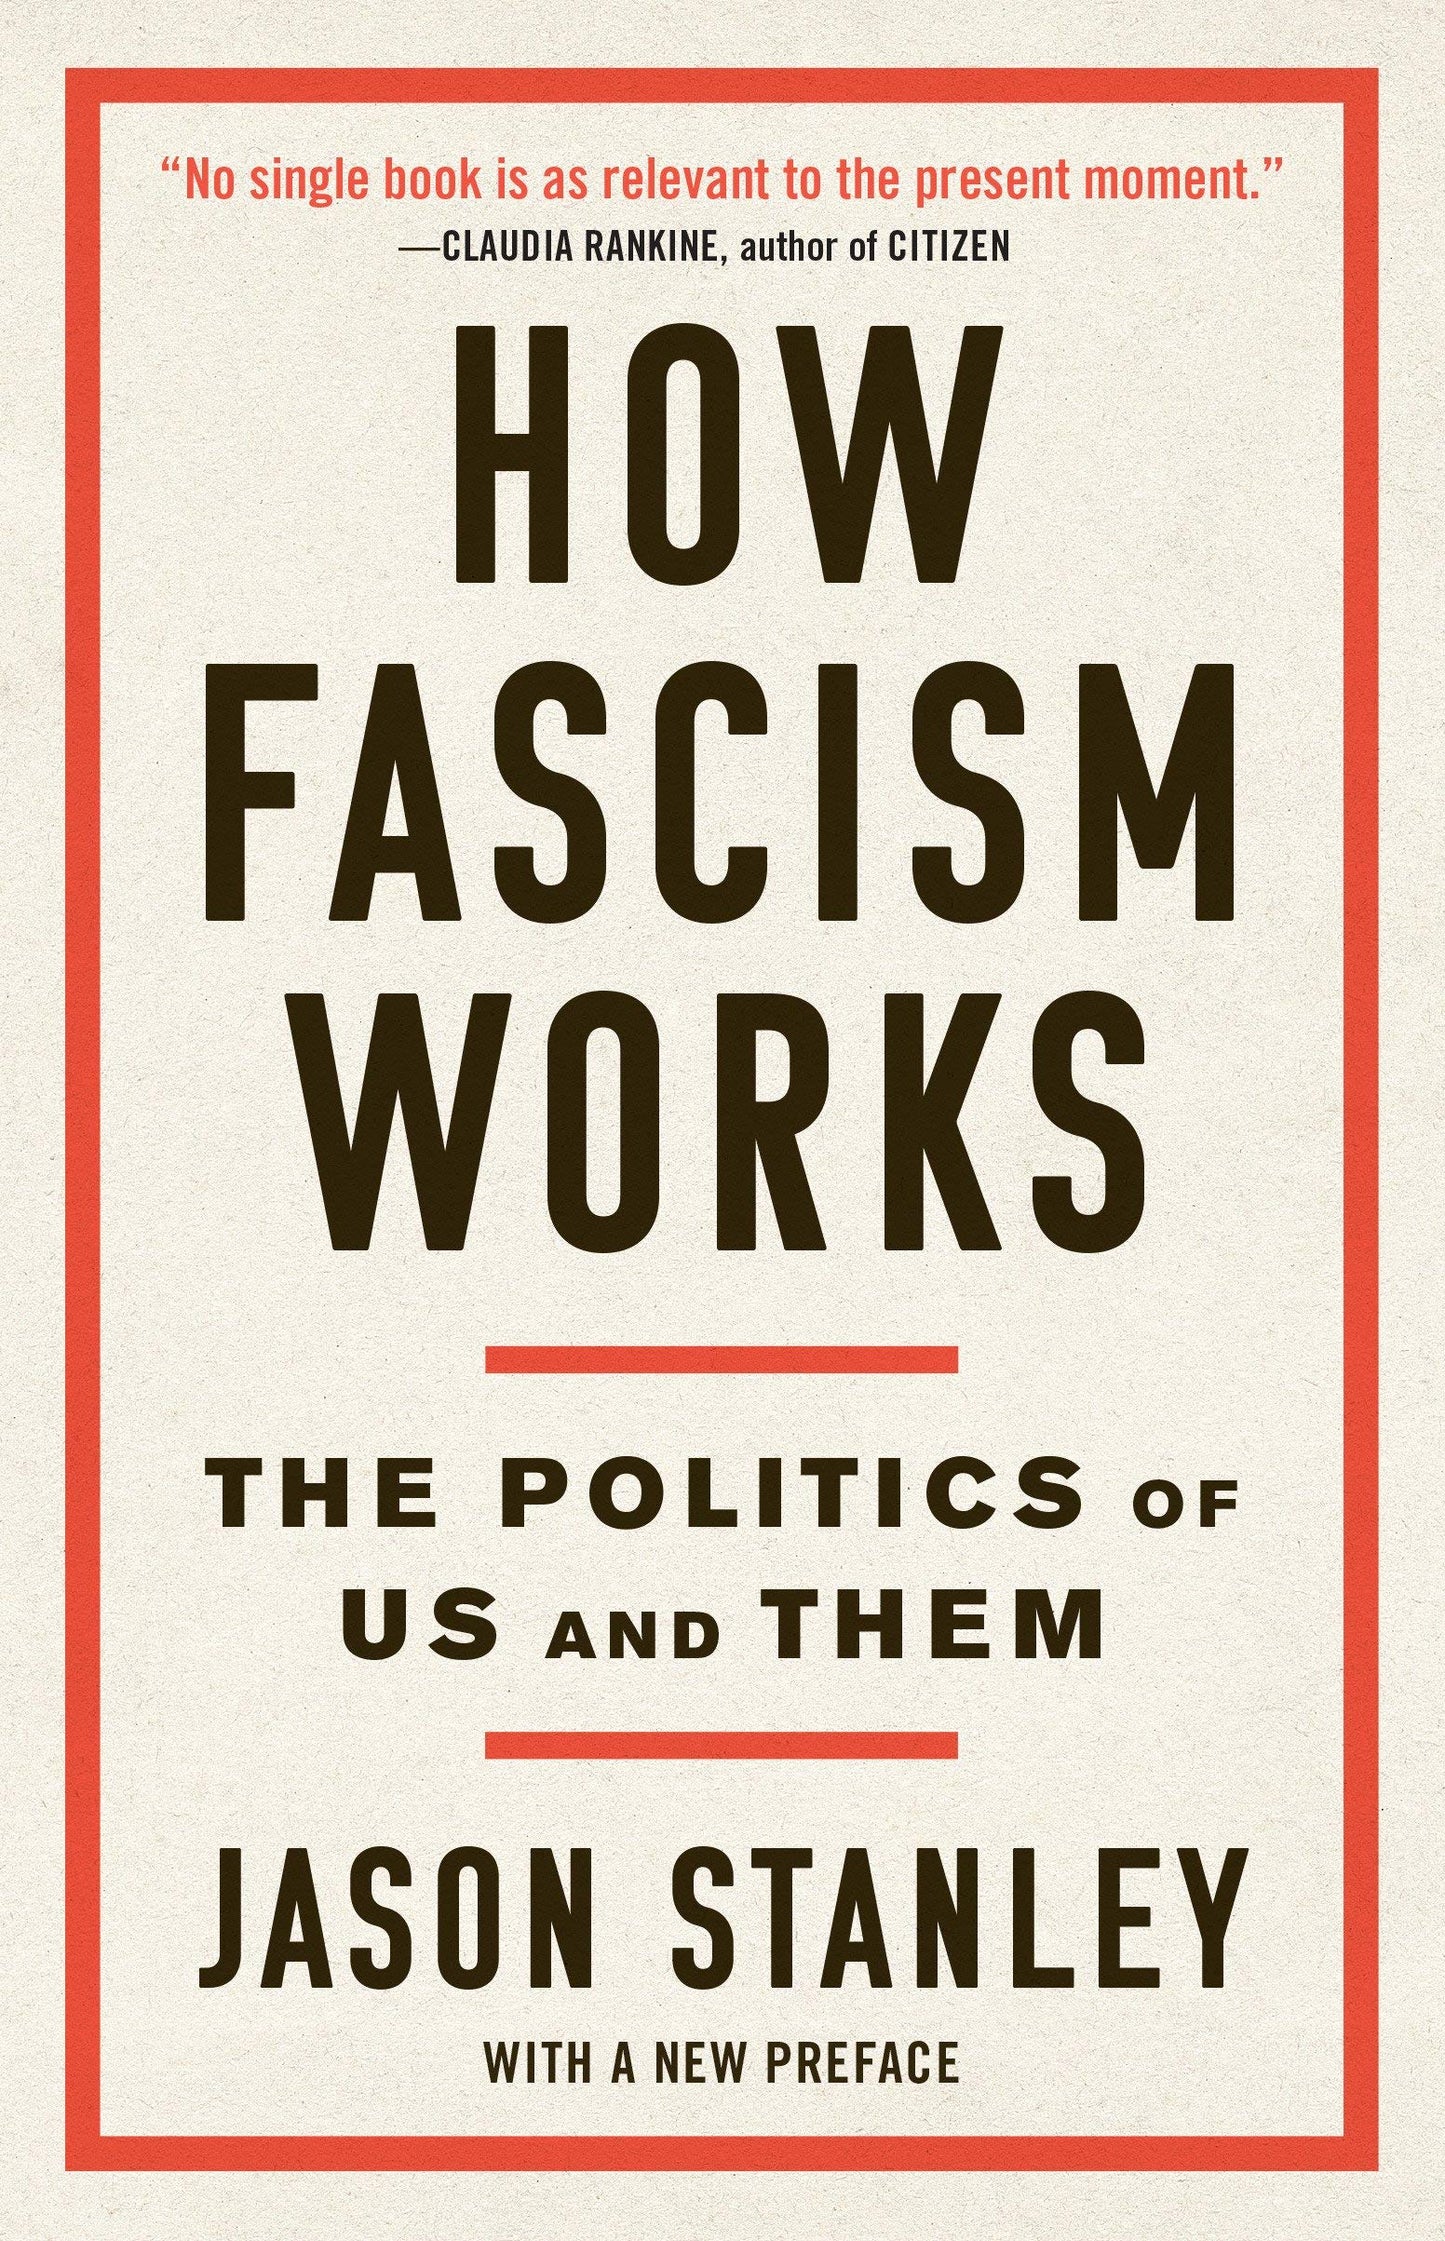 How Fascism Works, by Jason Stanley